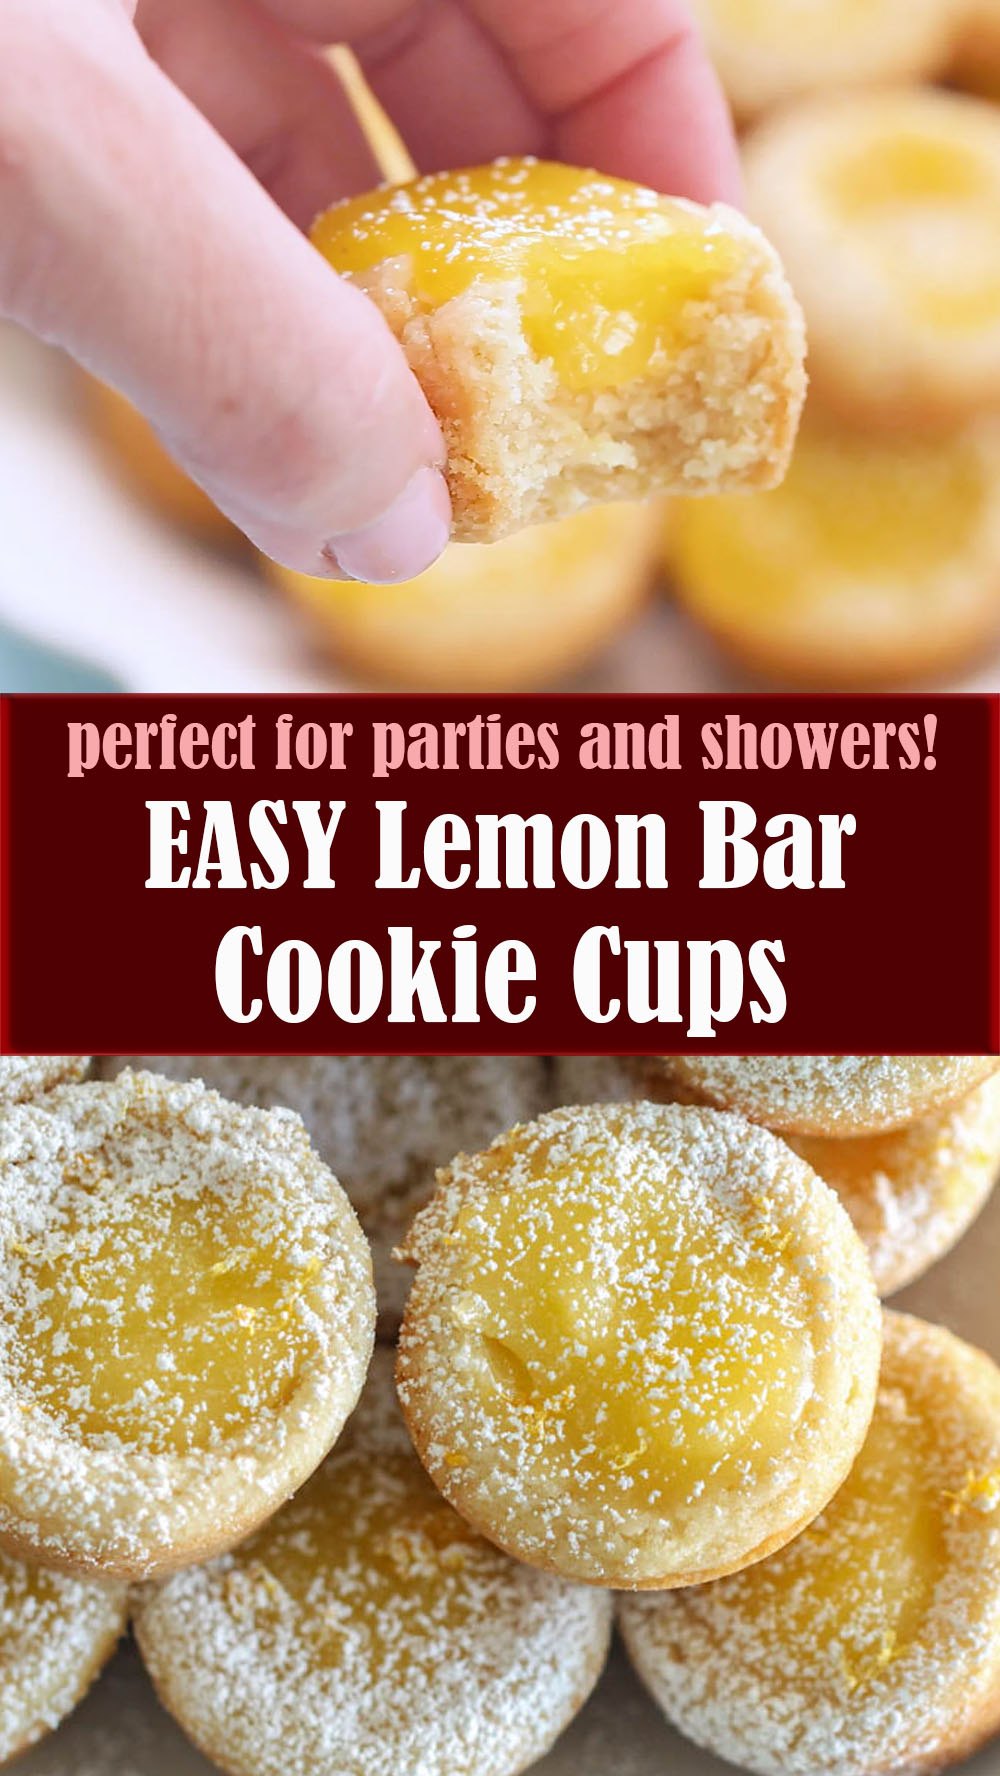 EASY Lemon Bar Cookie Cups